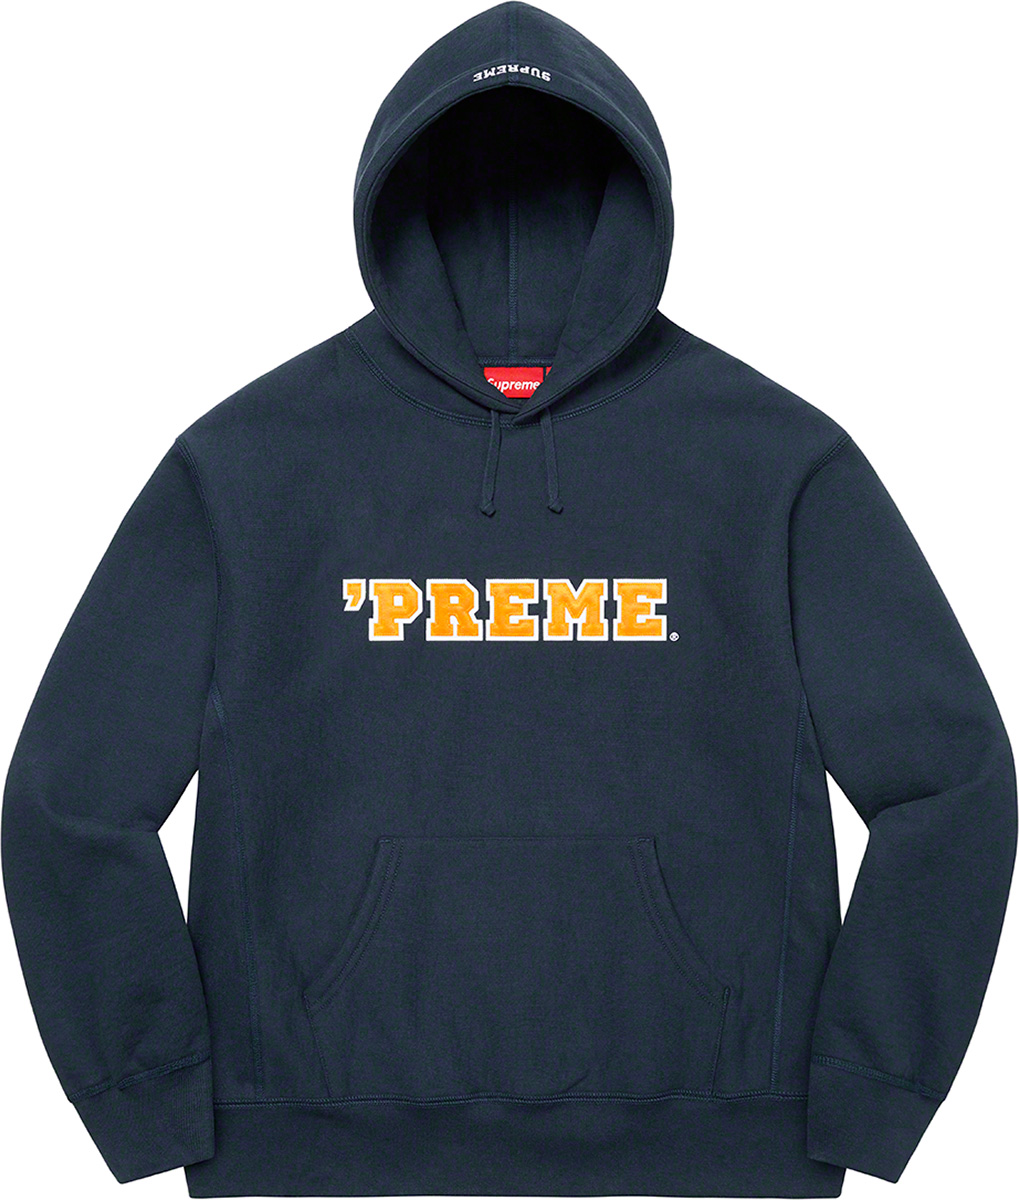 supreme-22aw-22fw-preme-hooded-sweatshirt